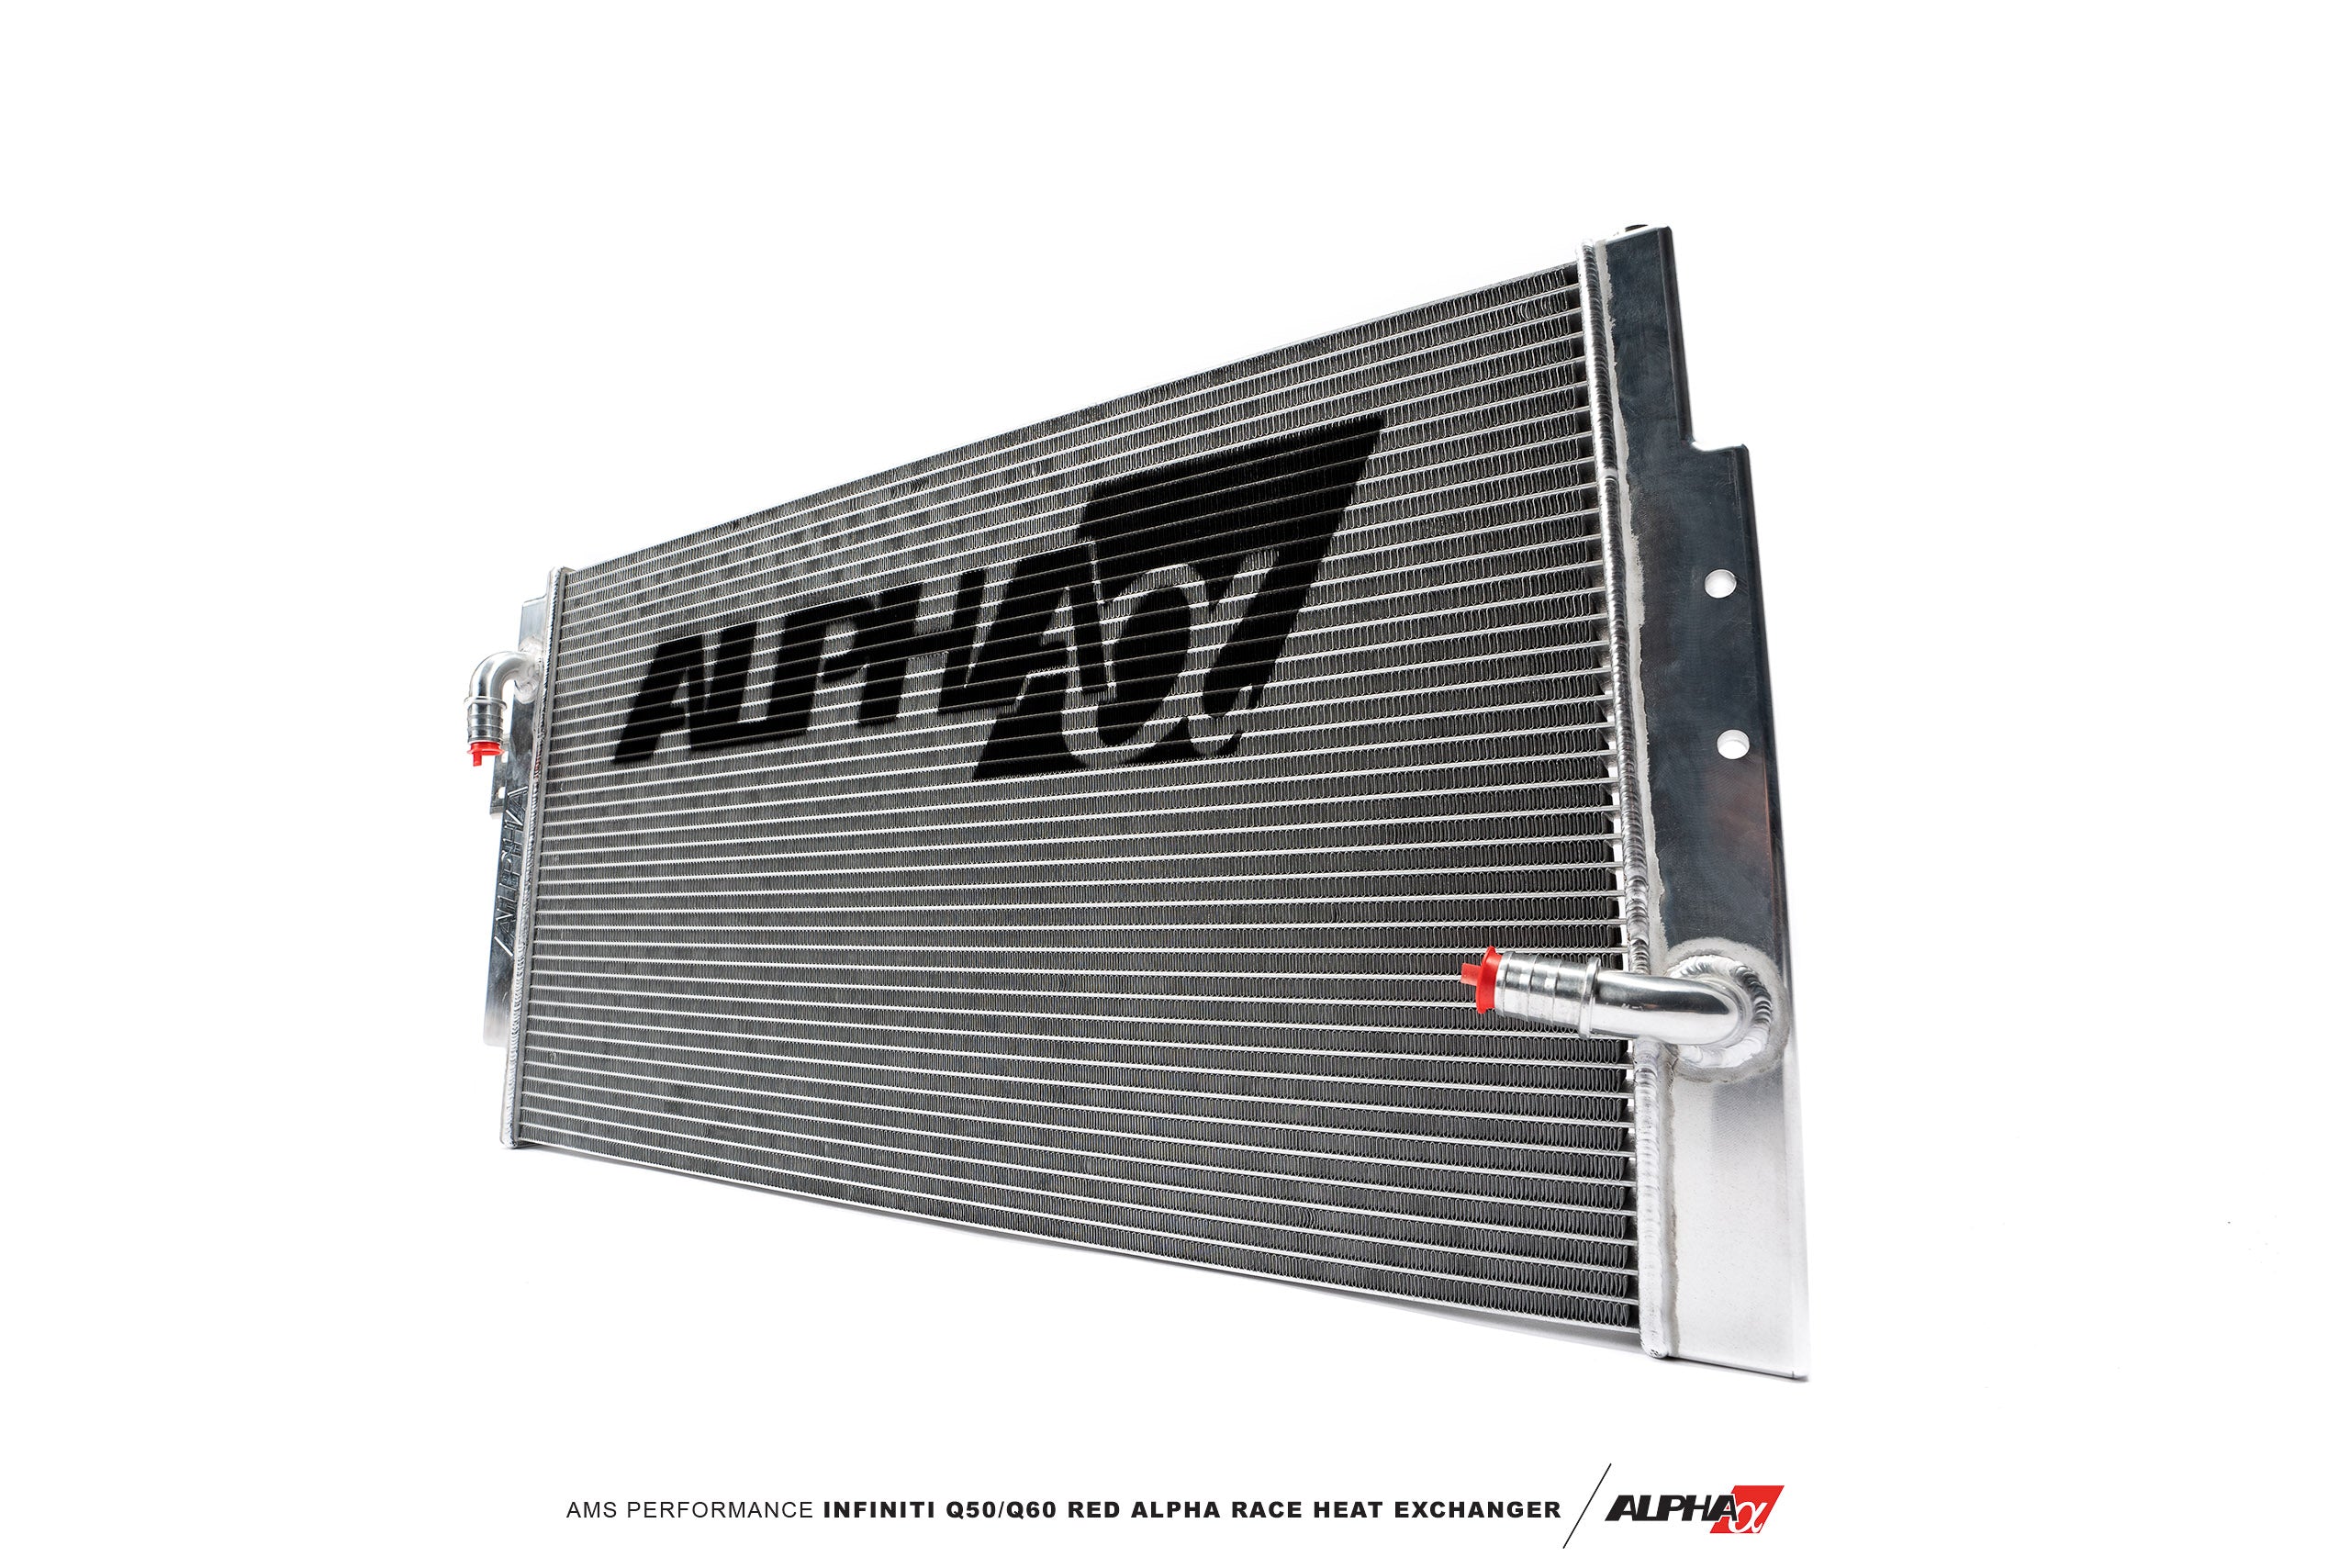 AMS Performance Q50/Q60 Red Alpha Race Heat Exchanger